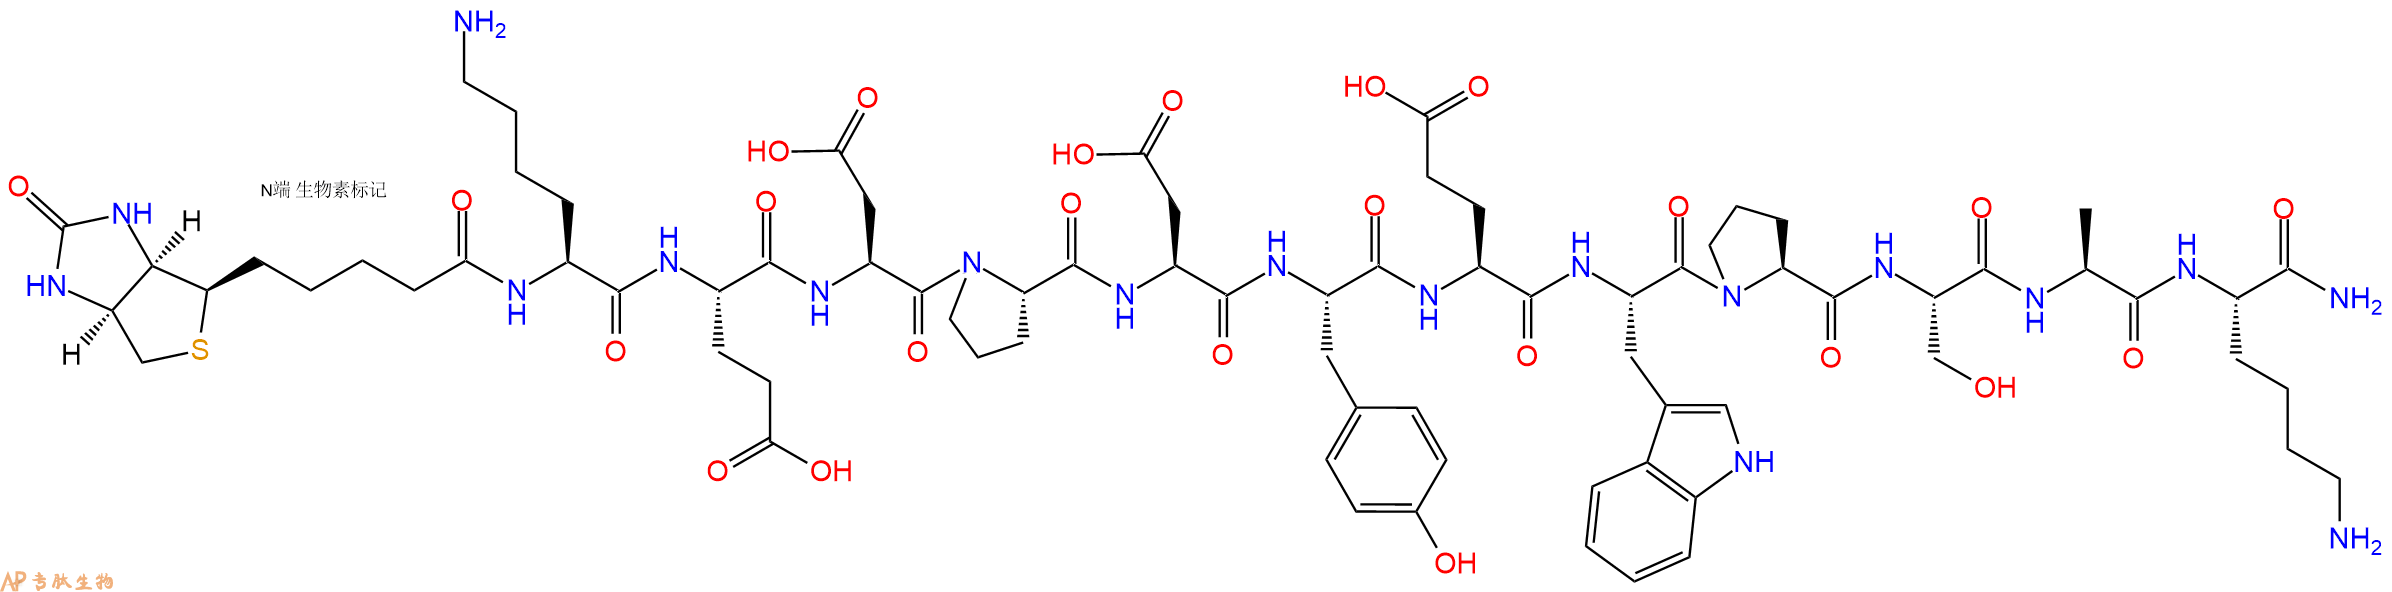 专肽生物产品SYK激酶底物 Syk Kinase Peptide Substrate, Biotin label